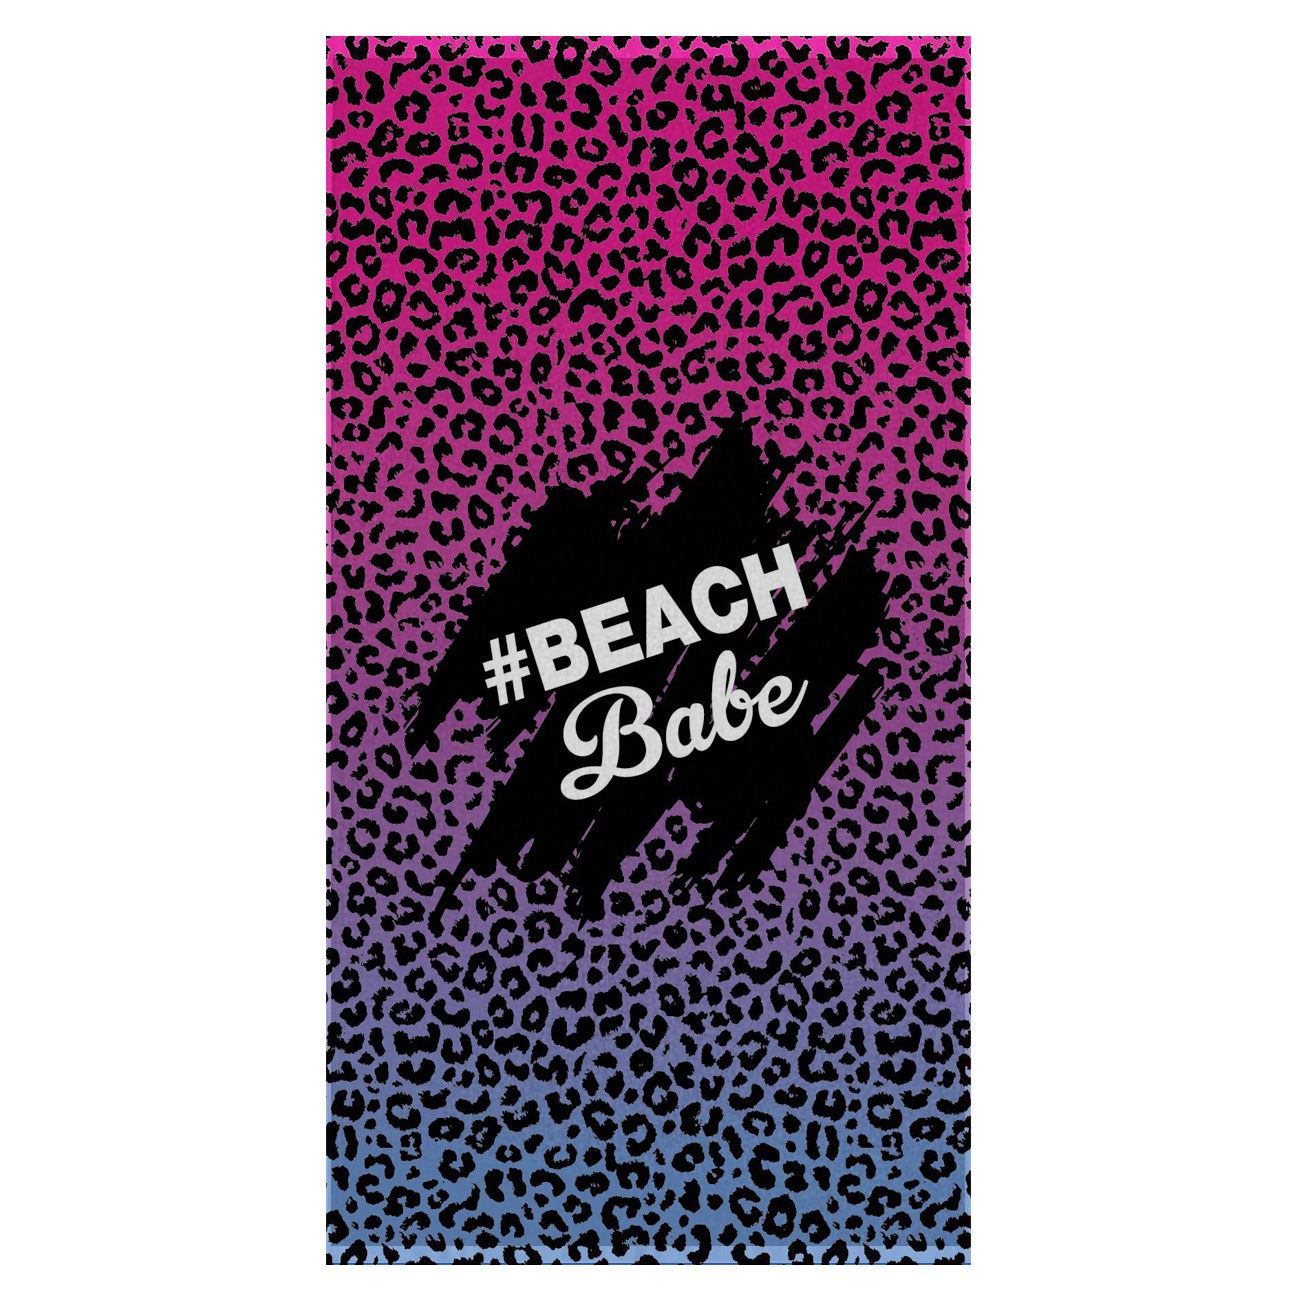 imagine ask Masculinity Πετσέτα Θαλάσσης Βαμβακερή Μωβ Λεοπαρ #Beach Babe 70x140 cm < Πετσέτες  Θαλάσσης Γυναικείες | Jumbo